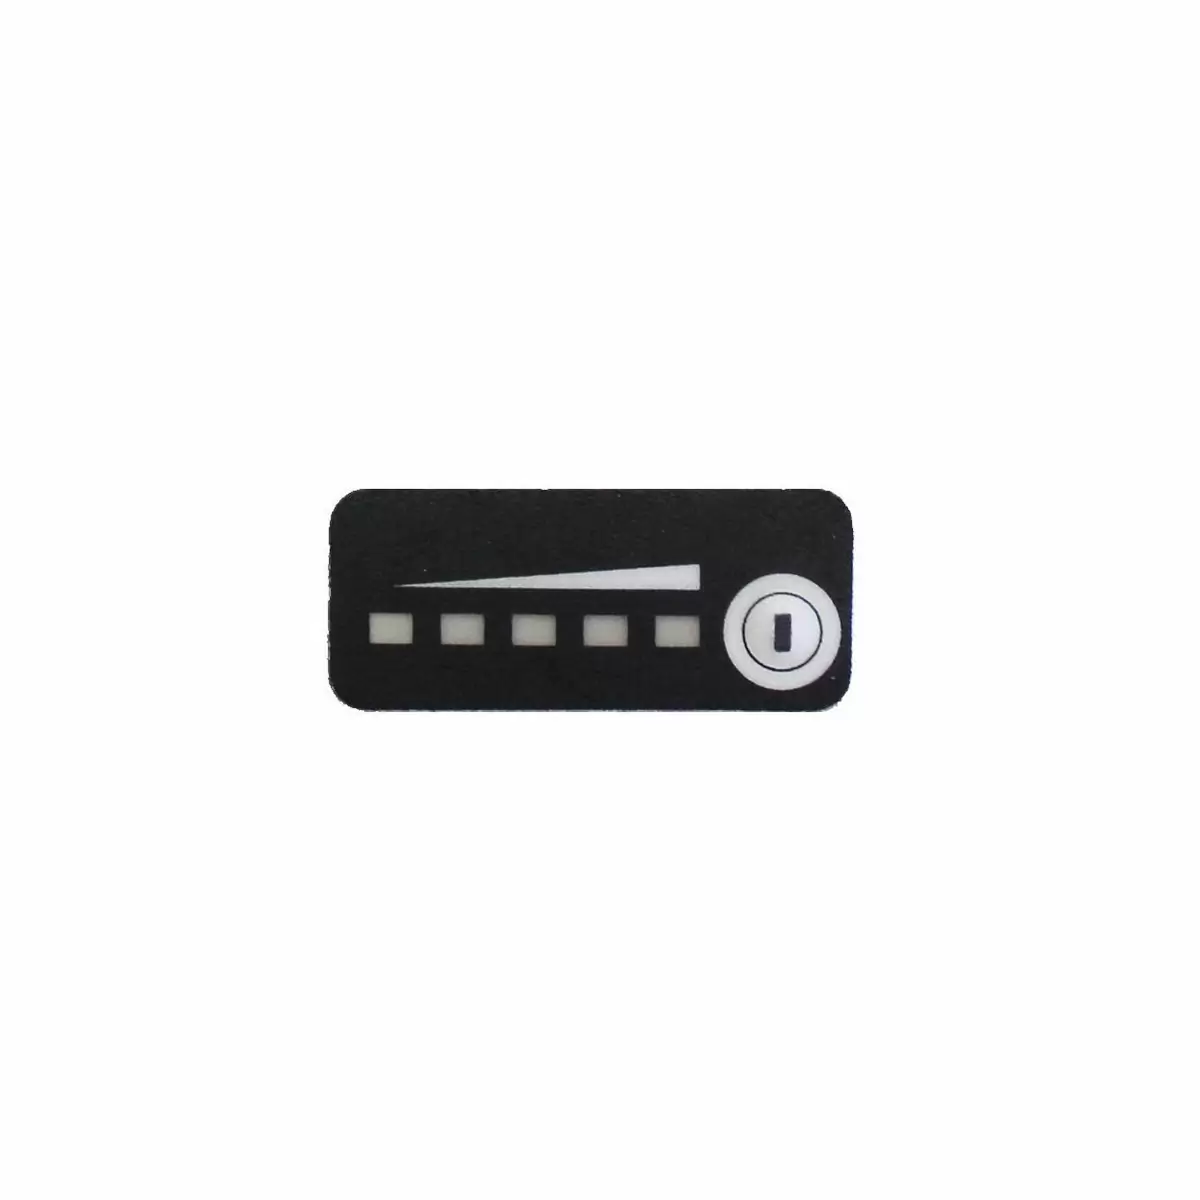 Pellicola interruttore / livello carica batteria PowerPack - image